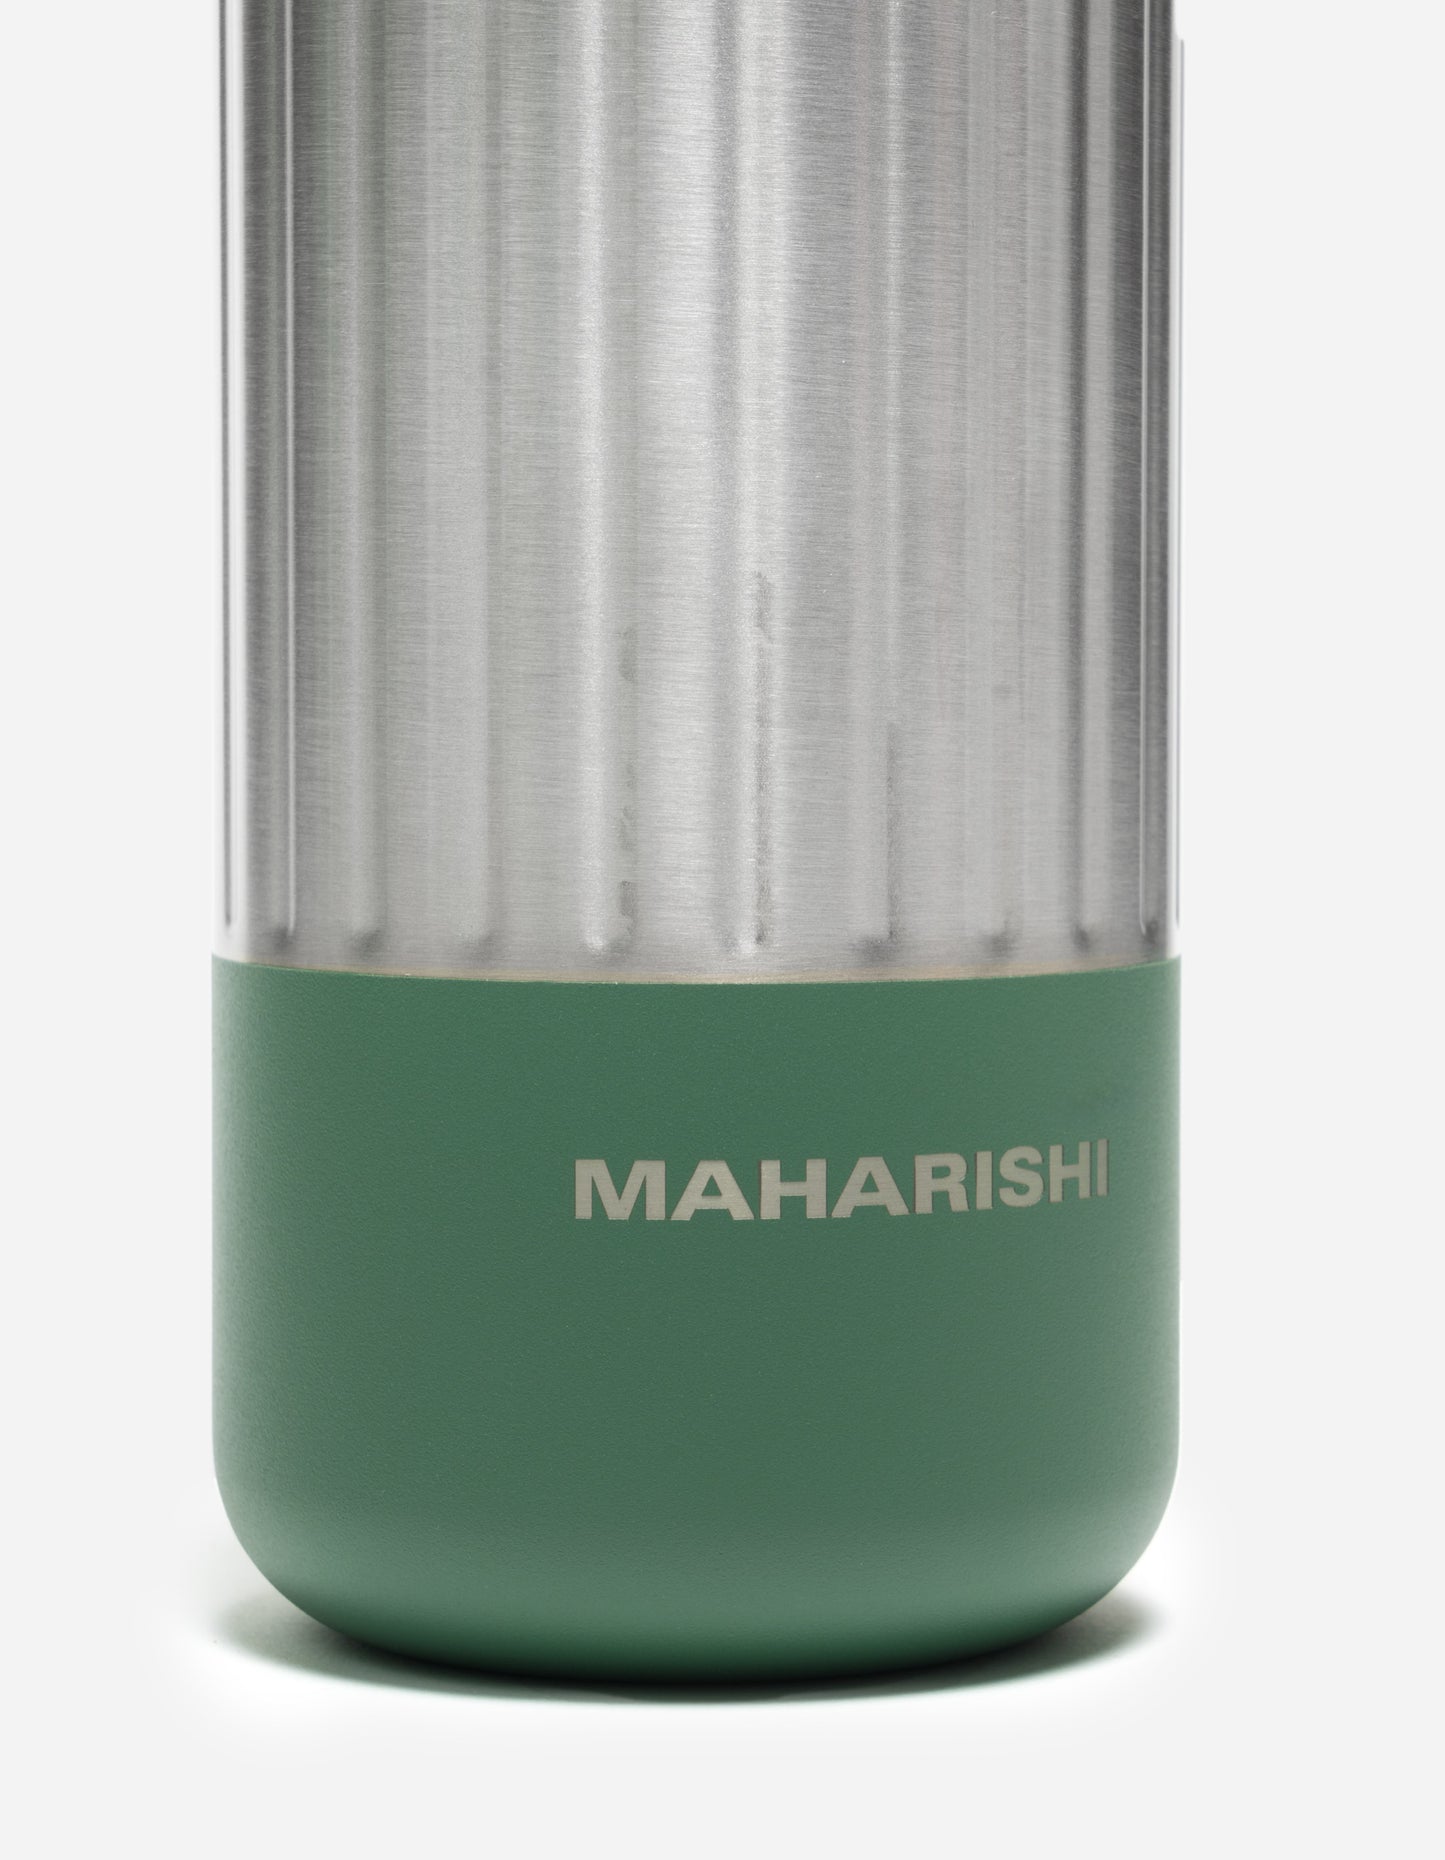 Maharishi x Black+Blum Explorer Bottle